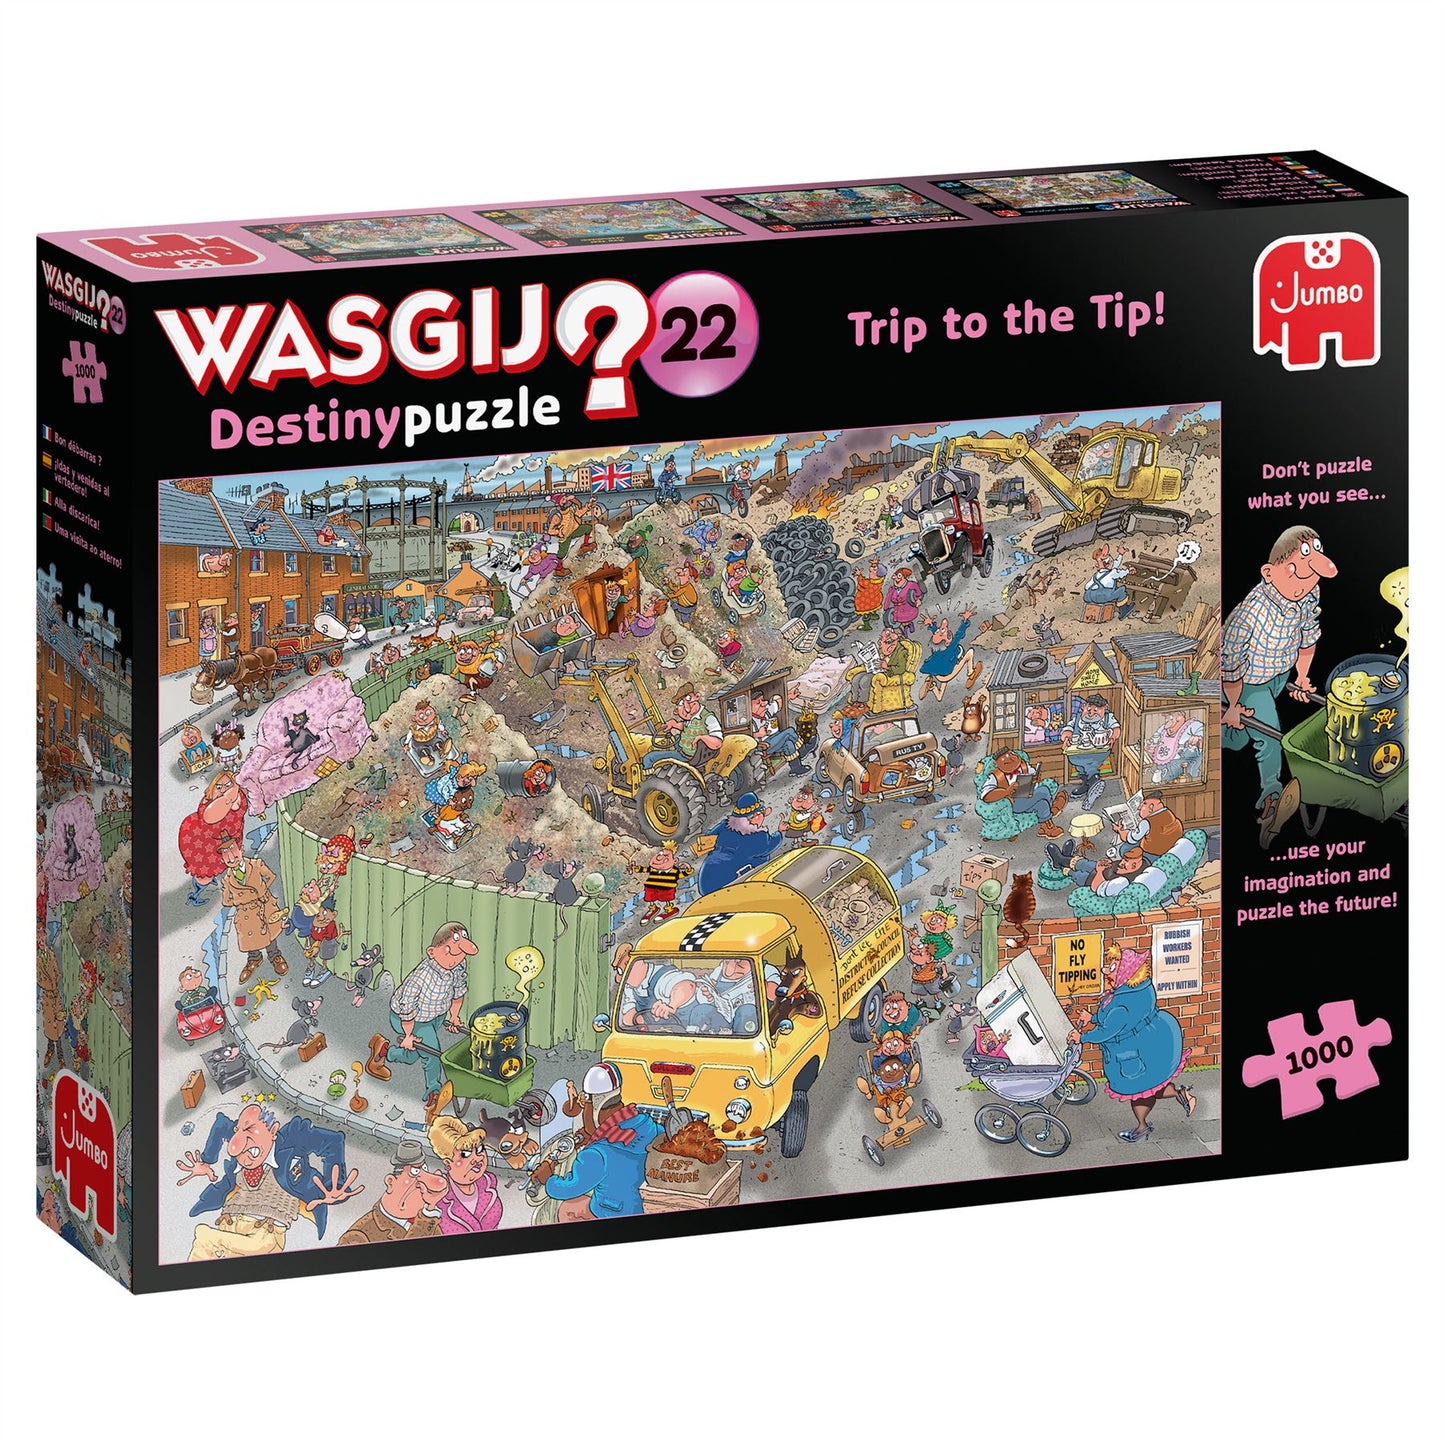 Wasgij Destiny 22 A Trip to the Tip! 1000 Piece Jigsaw Puzzle 2